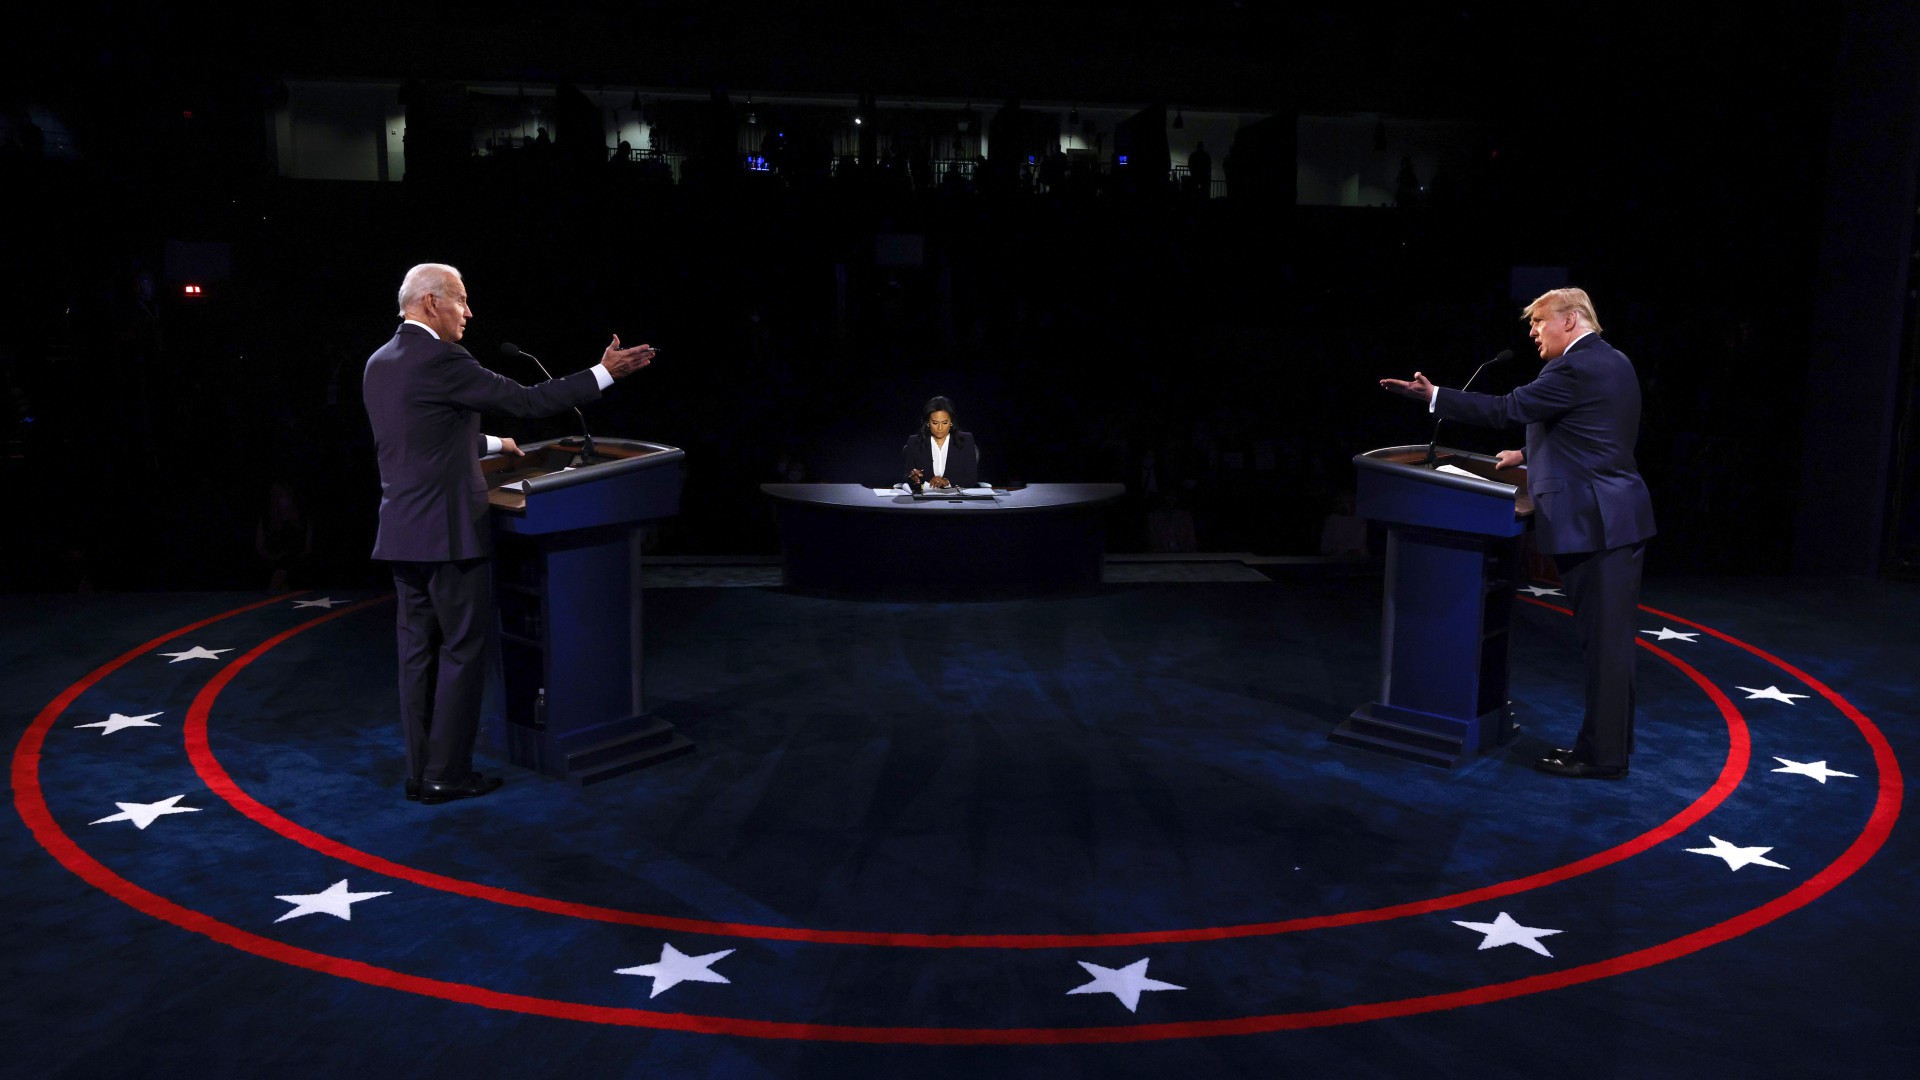 ￼OS DOIS candidatos debateram na última quinta-feira, em Nashville (Foto: JIM BOURG / POOL / AFP)